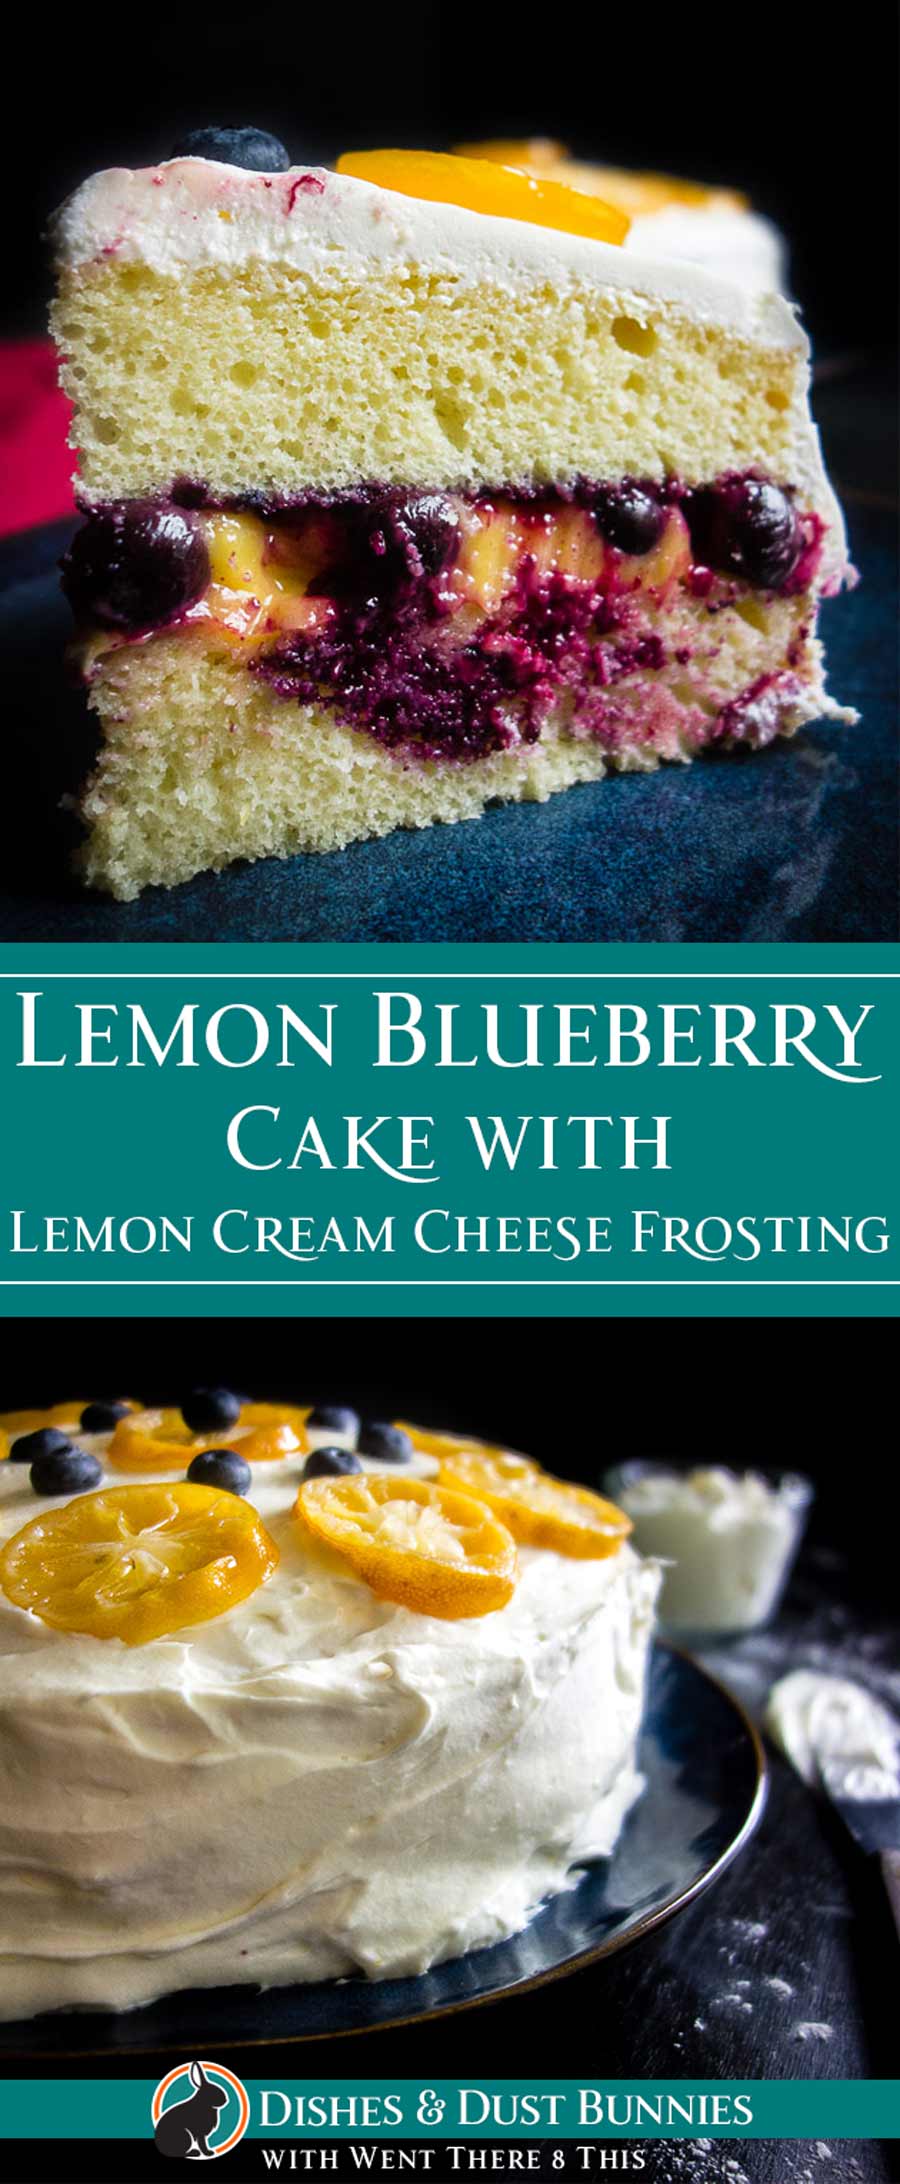 Lemon Blueberry Cake with Lemon Cream Cheese Frosting